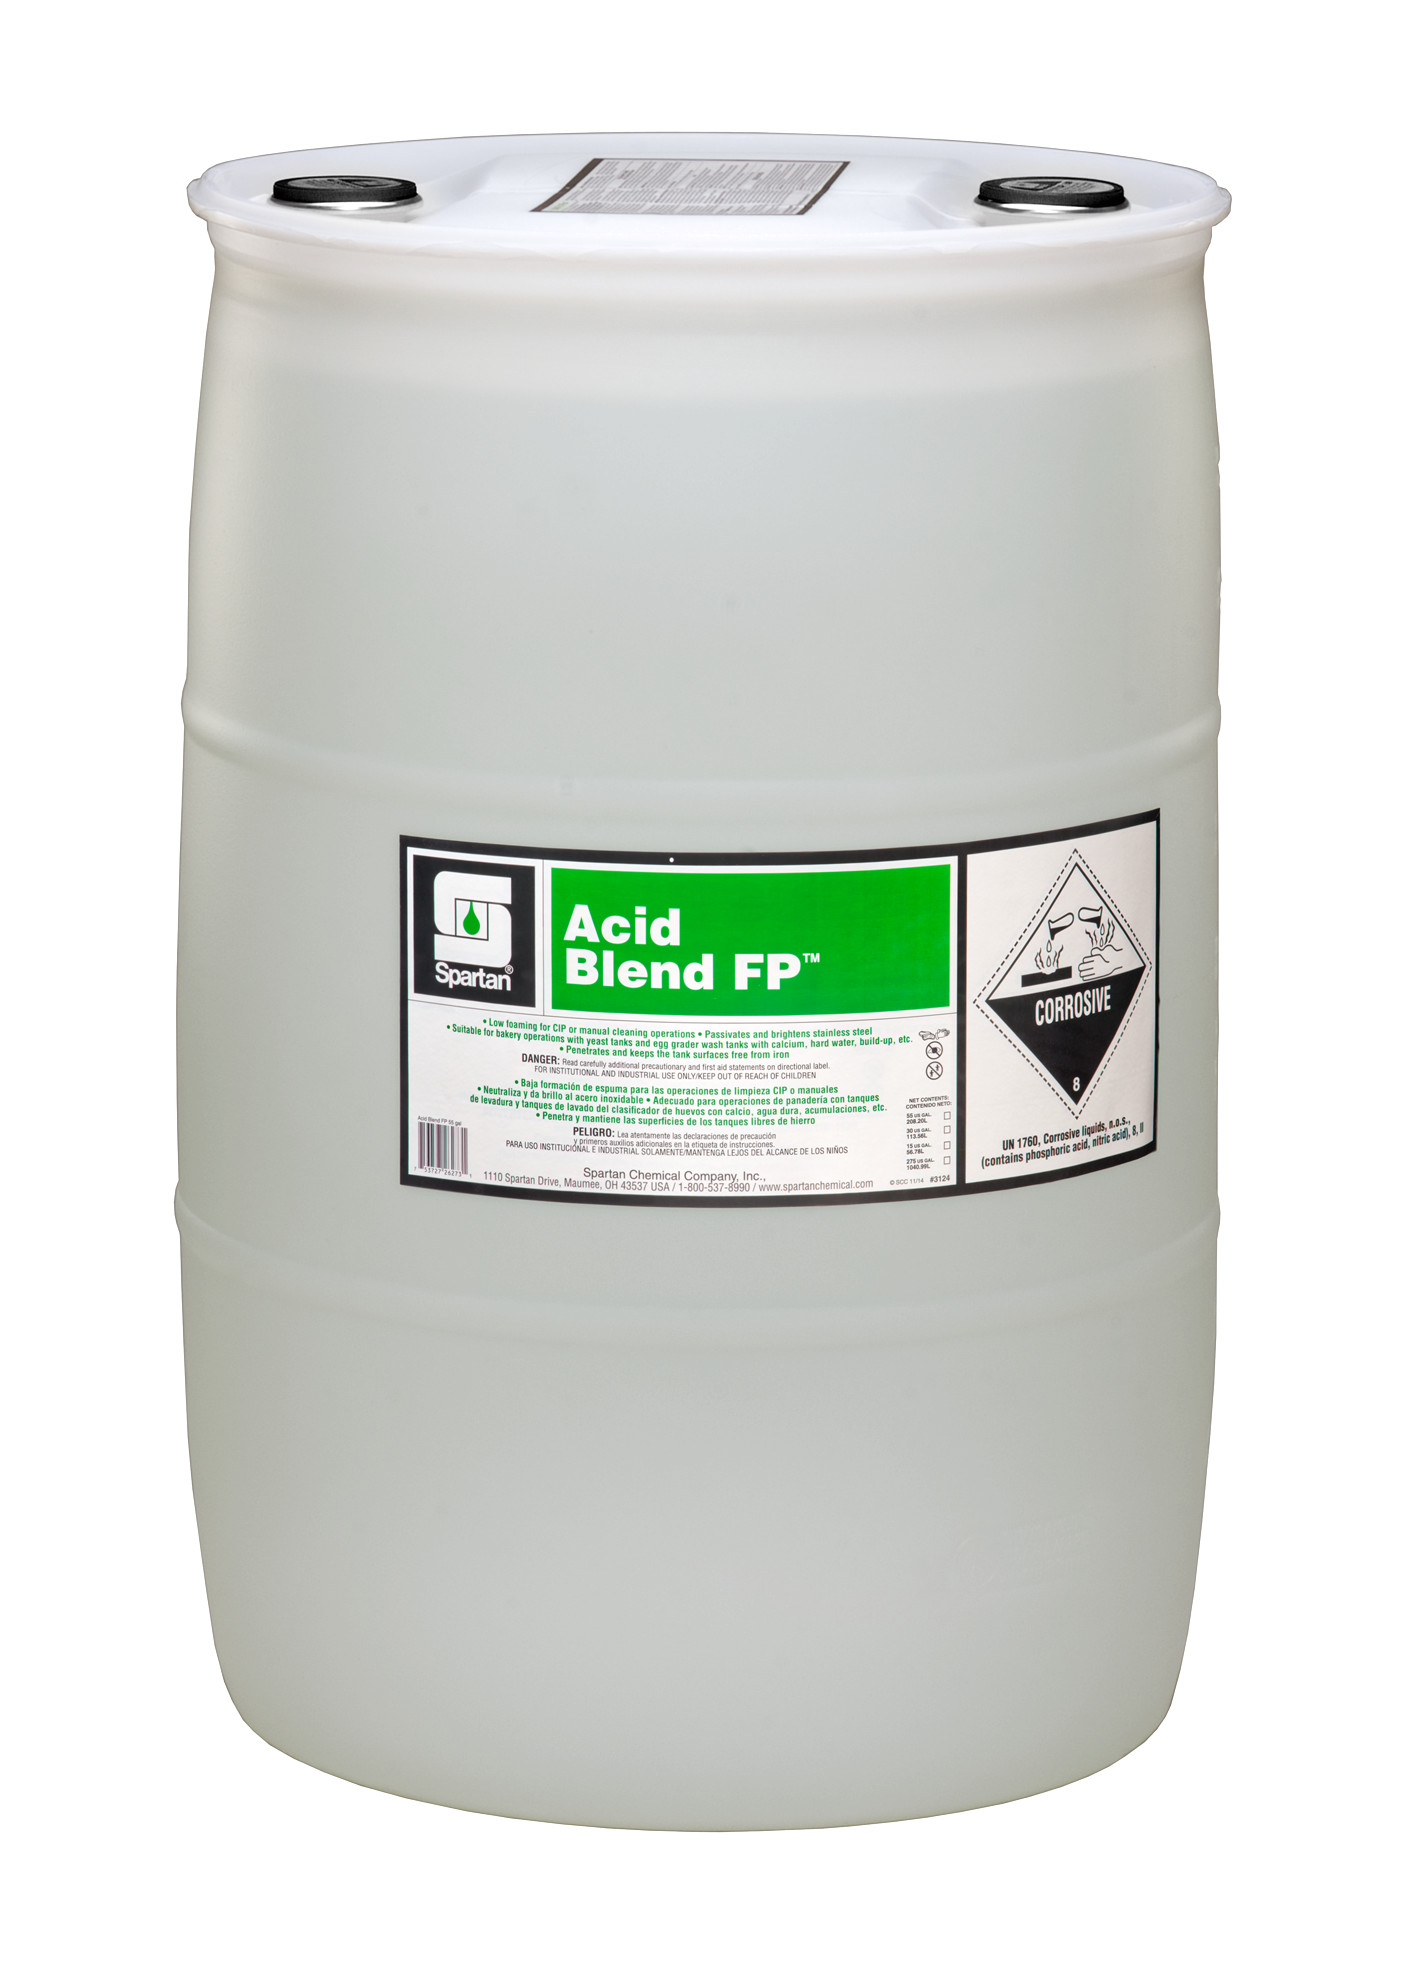 Spartan Chemical Company Acid Blend FP, 55 GAL DRUM